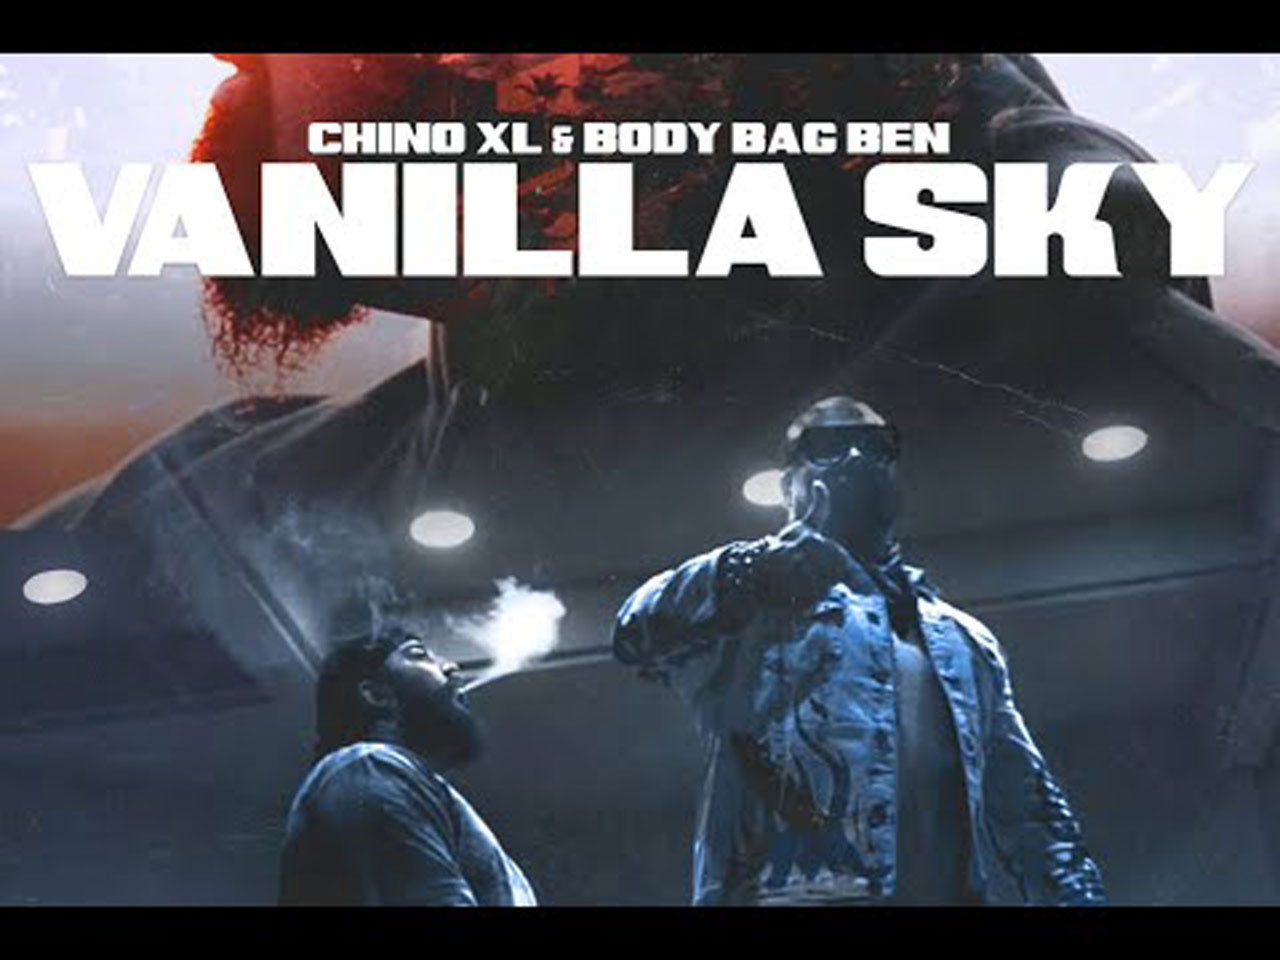 Chino XL & Body Bag Ben - Vanilla Sky (Video)